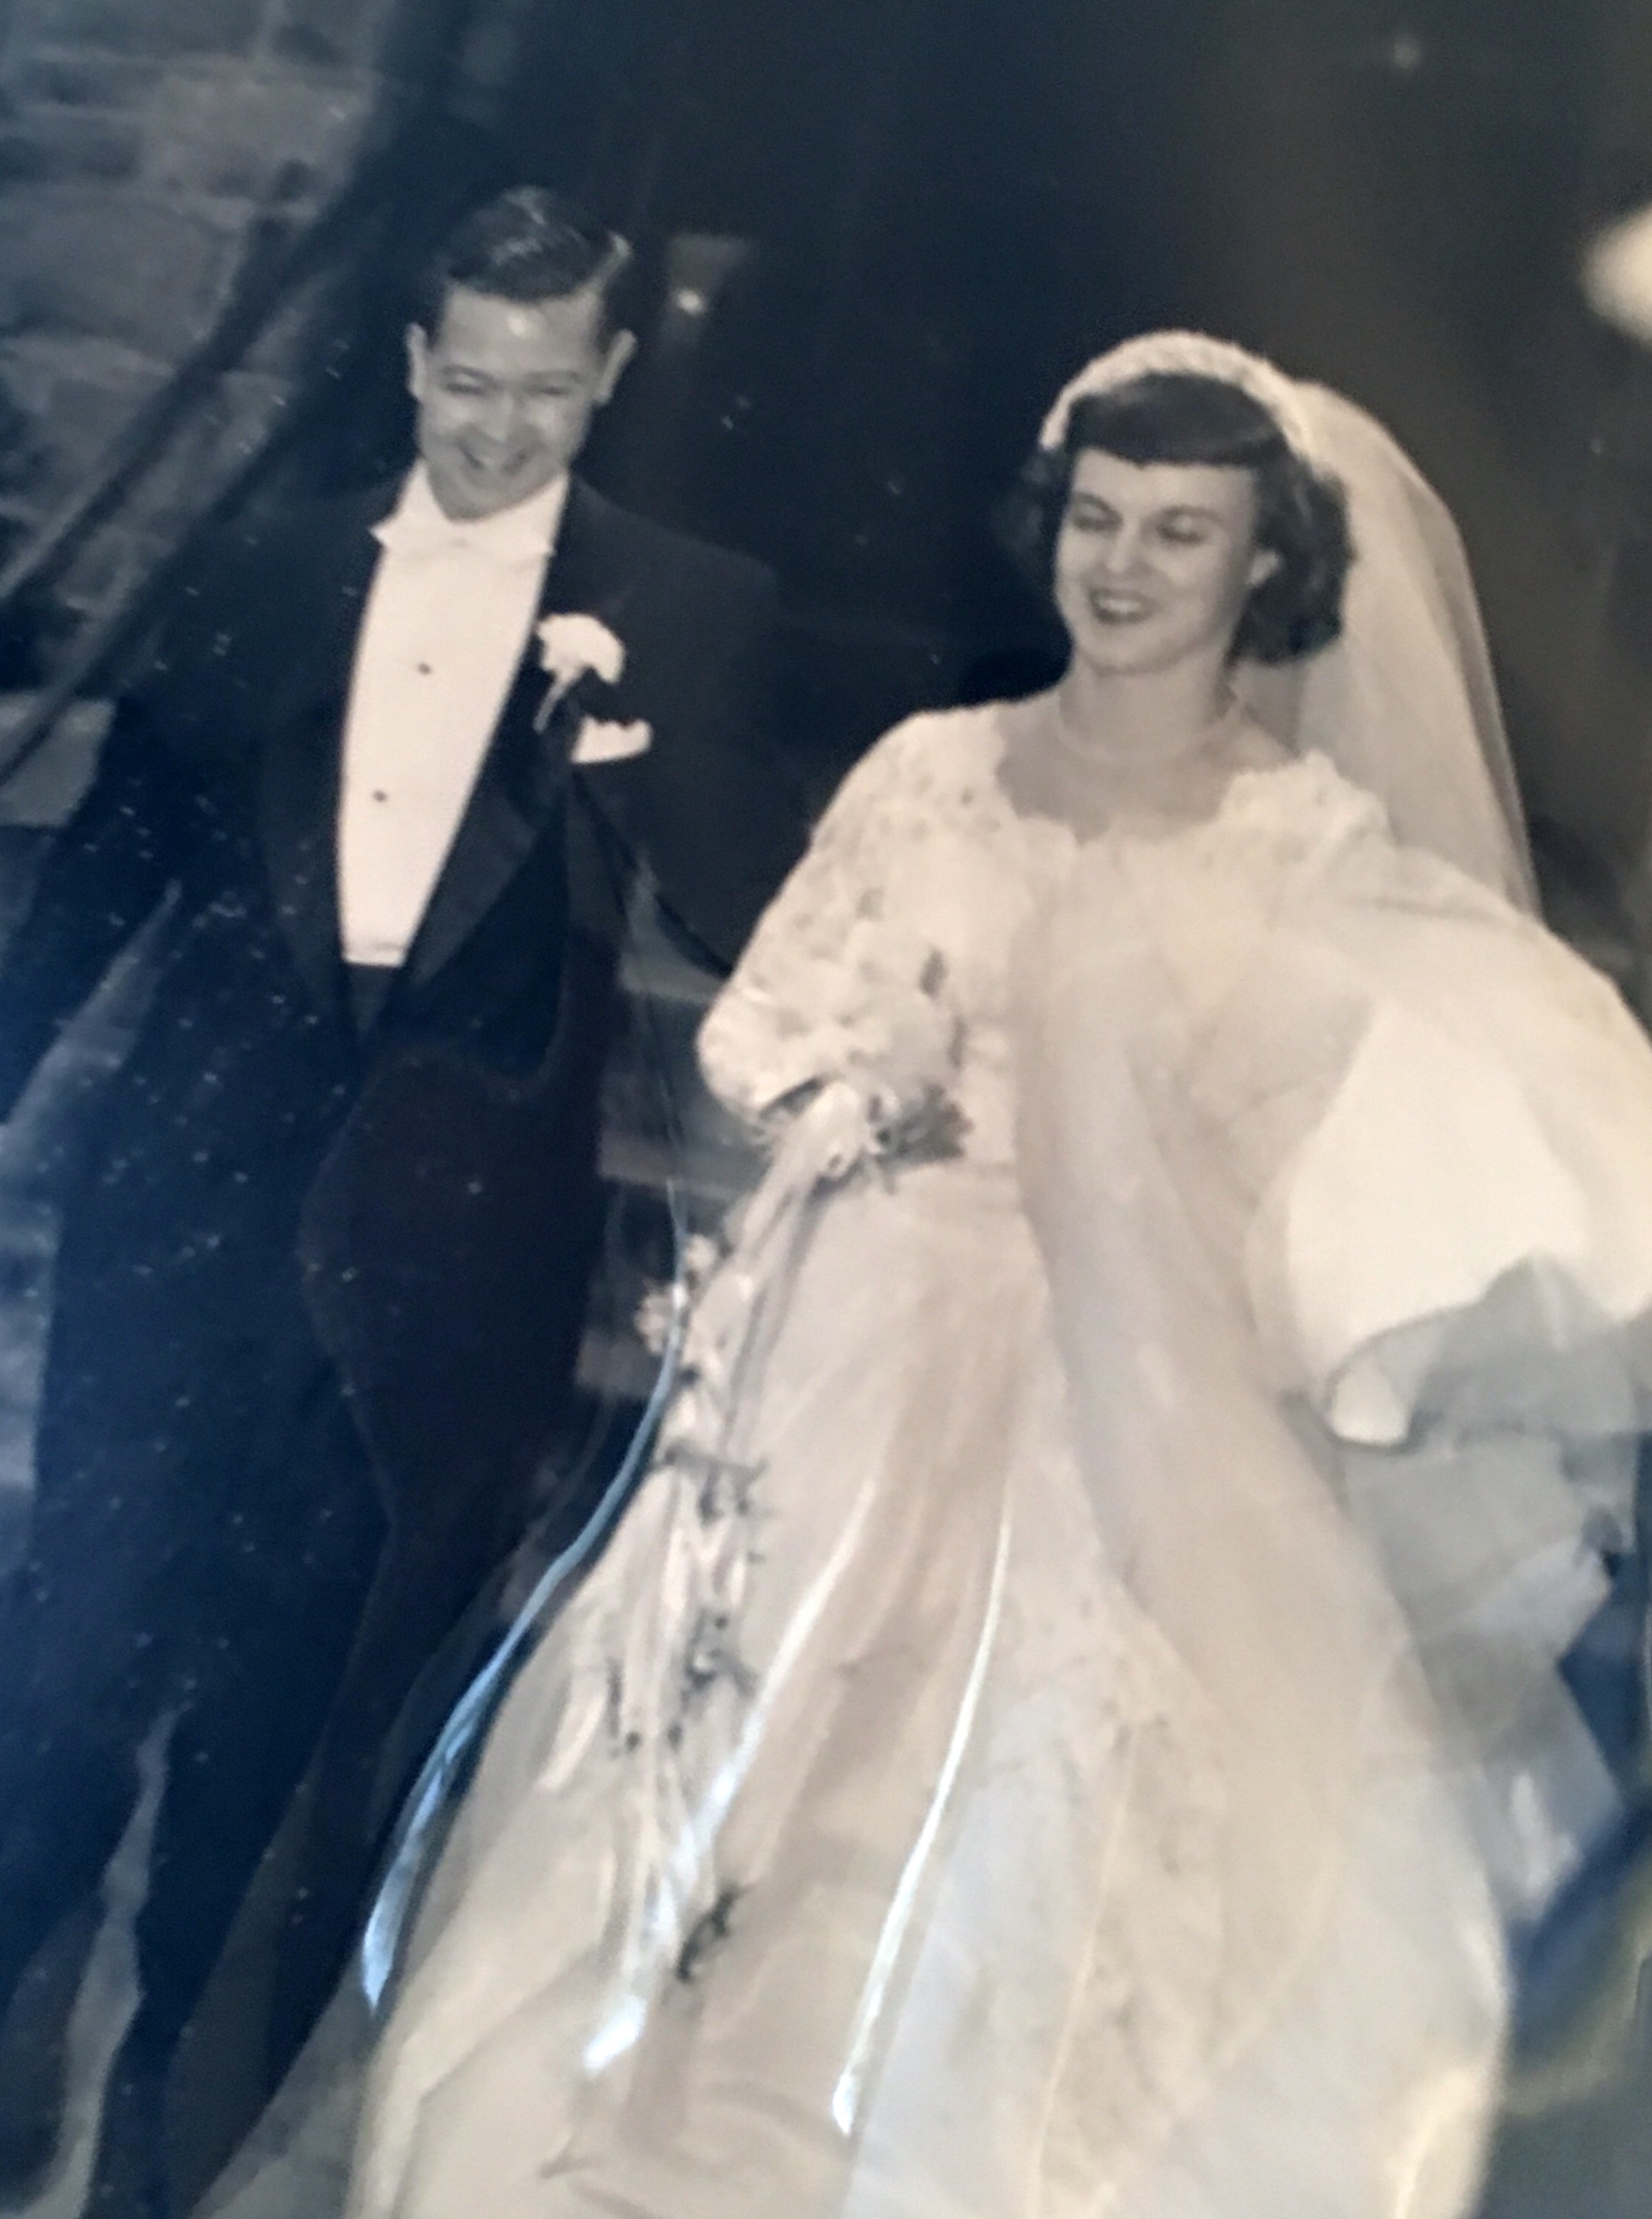 Wedding Day for Doris & Tom McGowan November 14, 1953 or 63 years ago. 